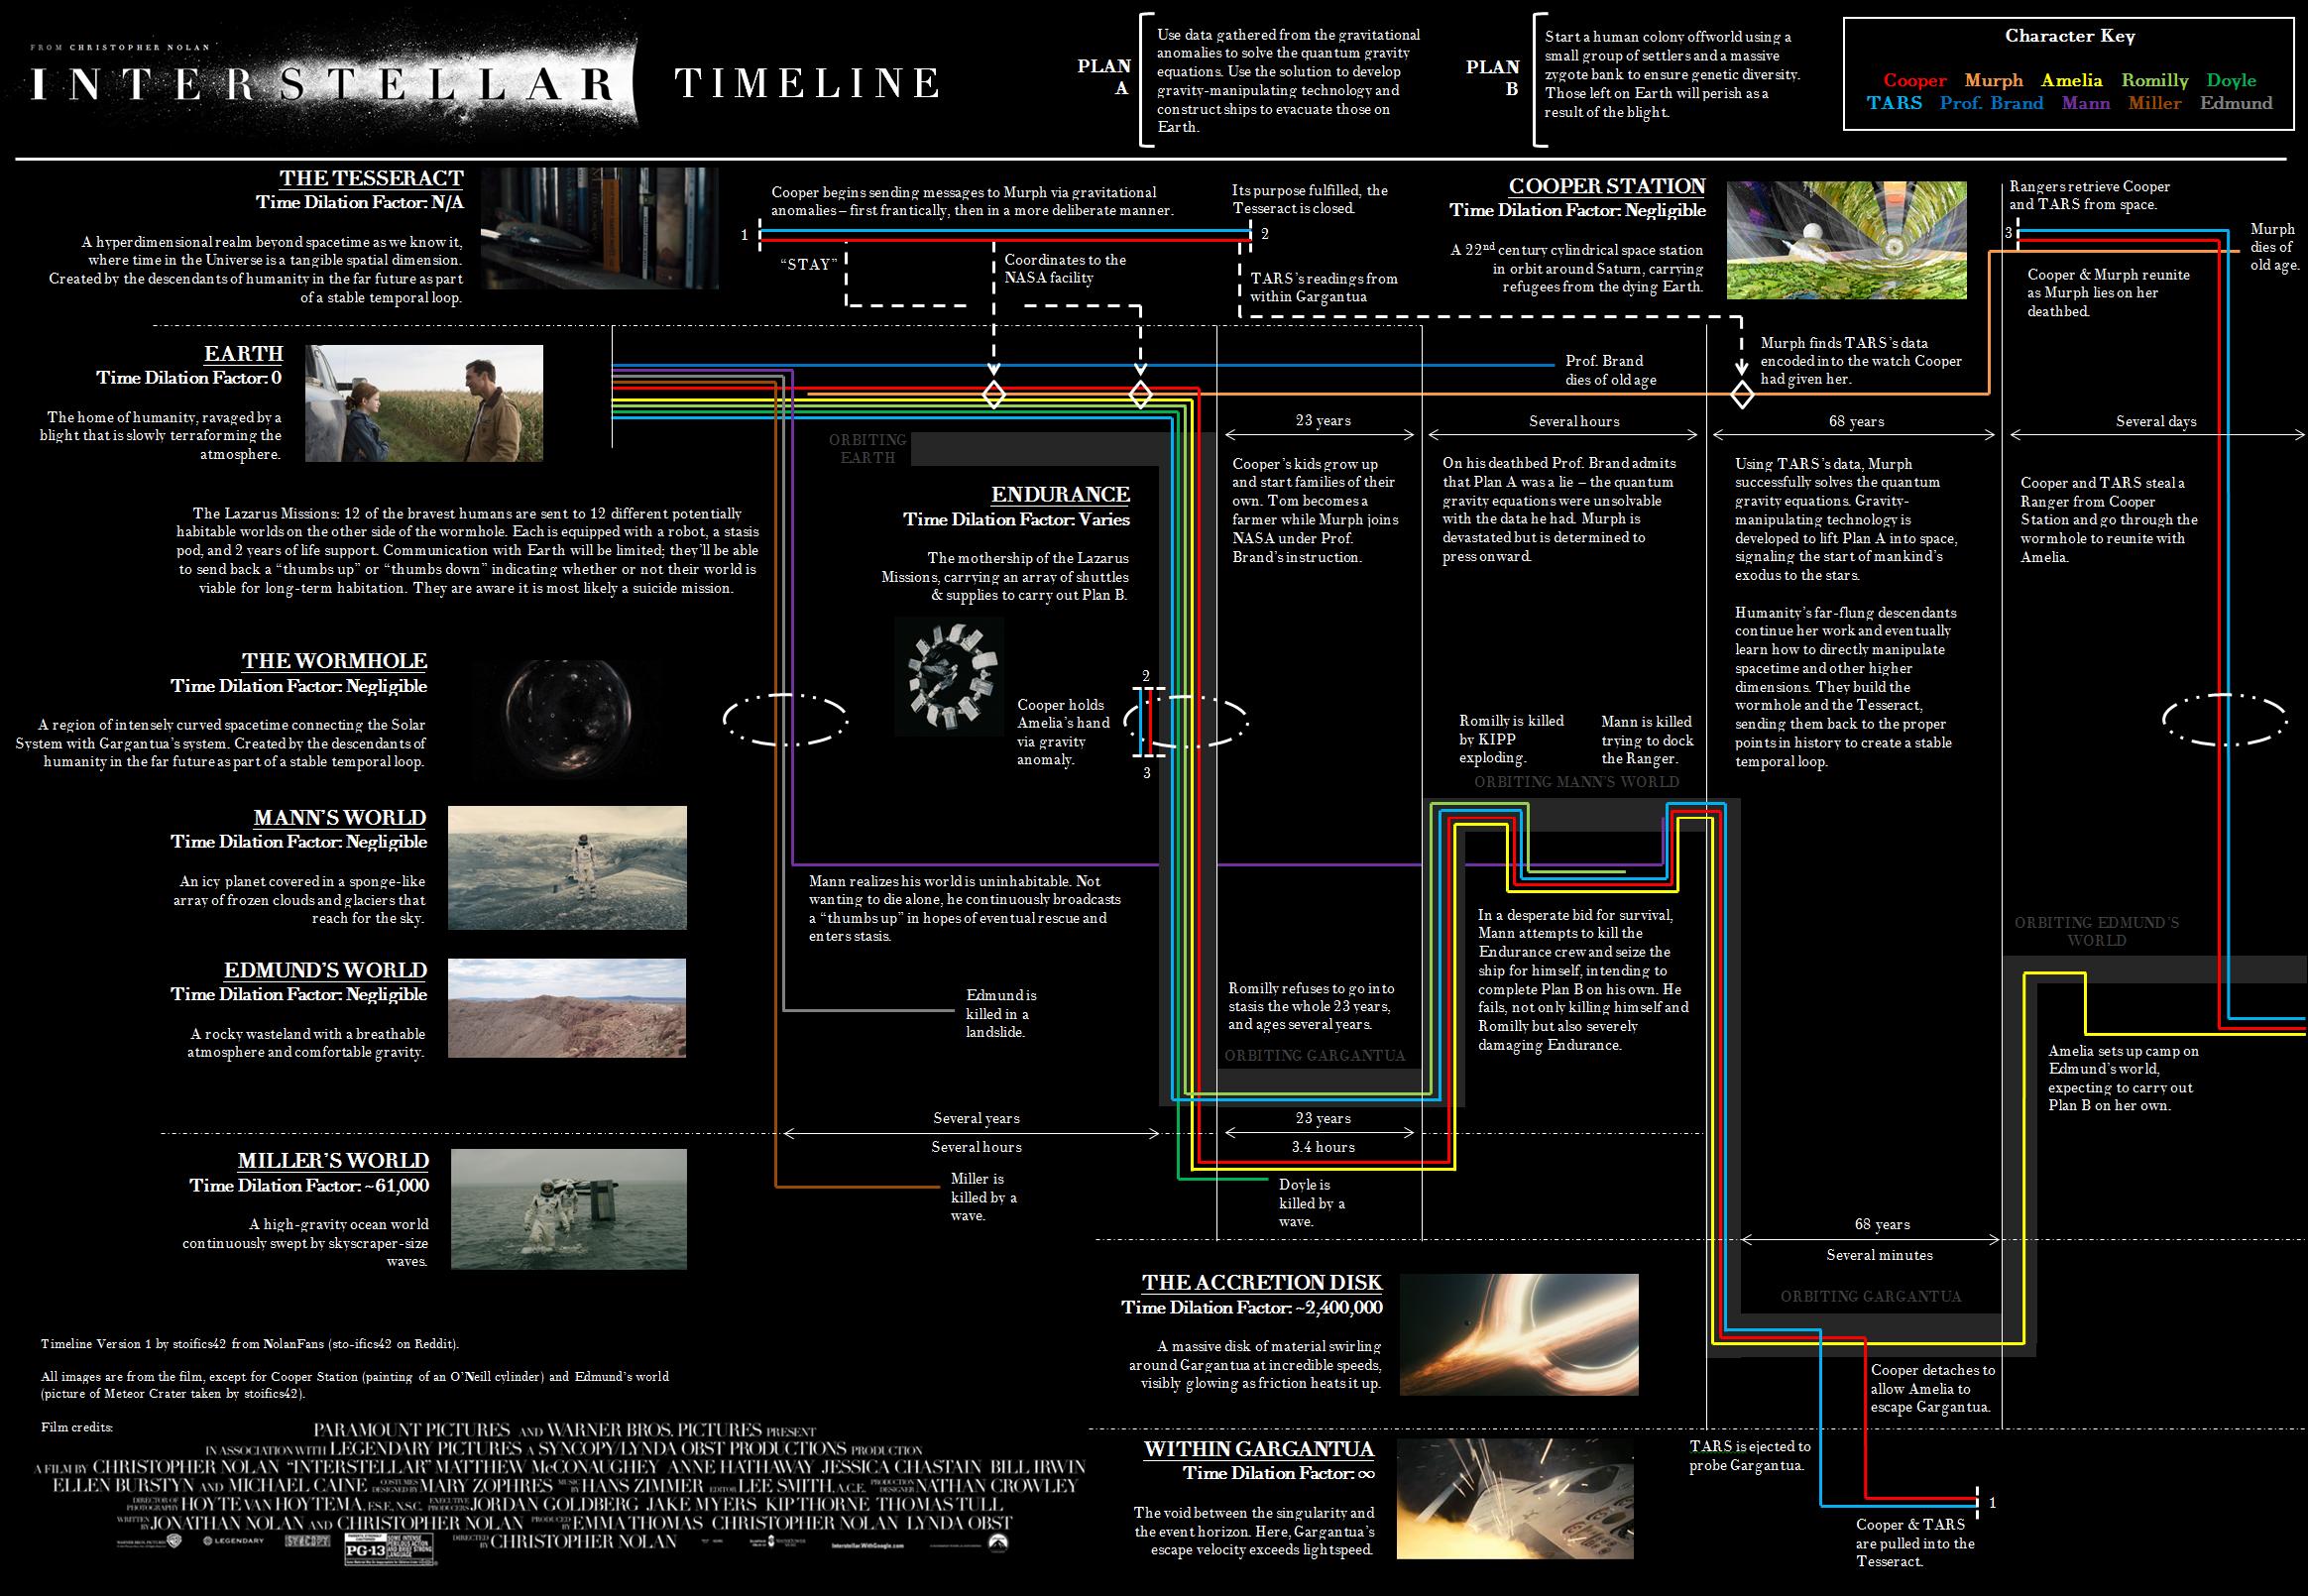 interstellar-timeline-explained-in-infographic-spoilers.jpg